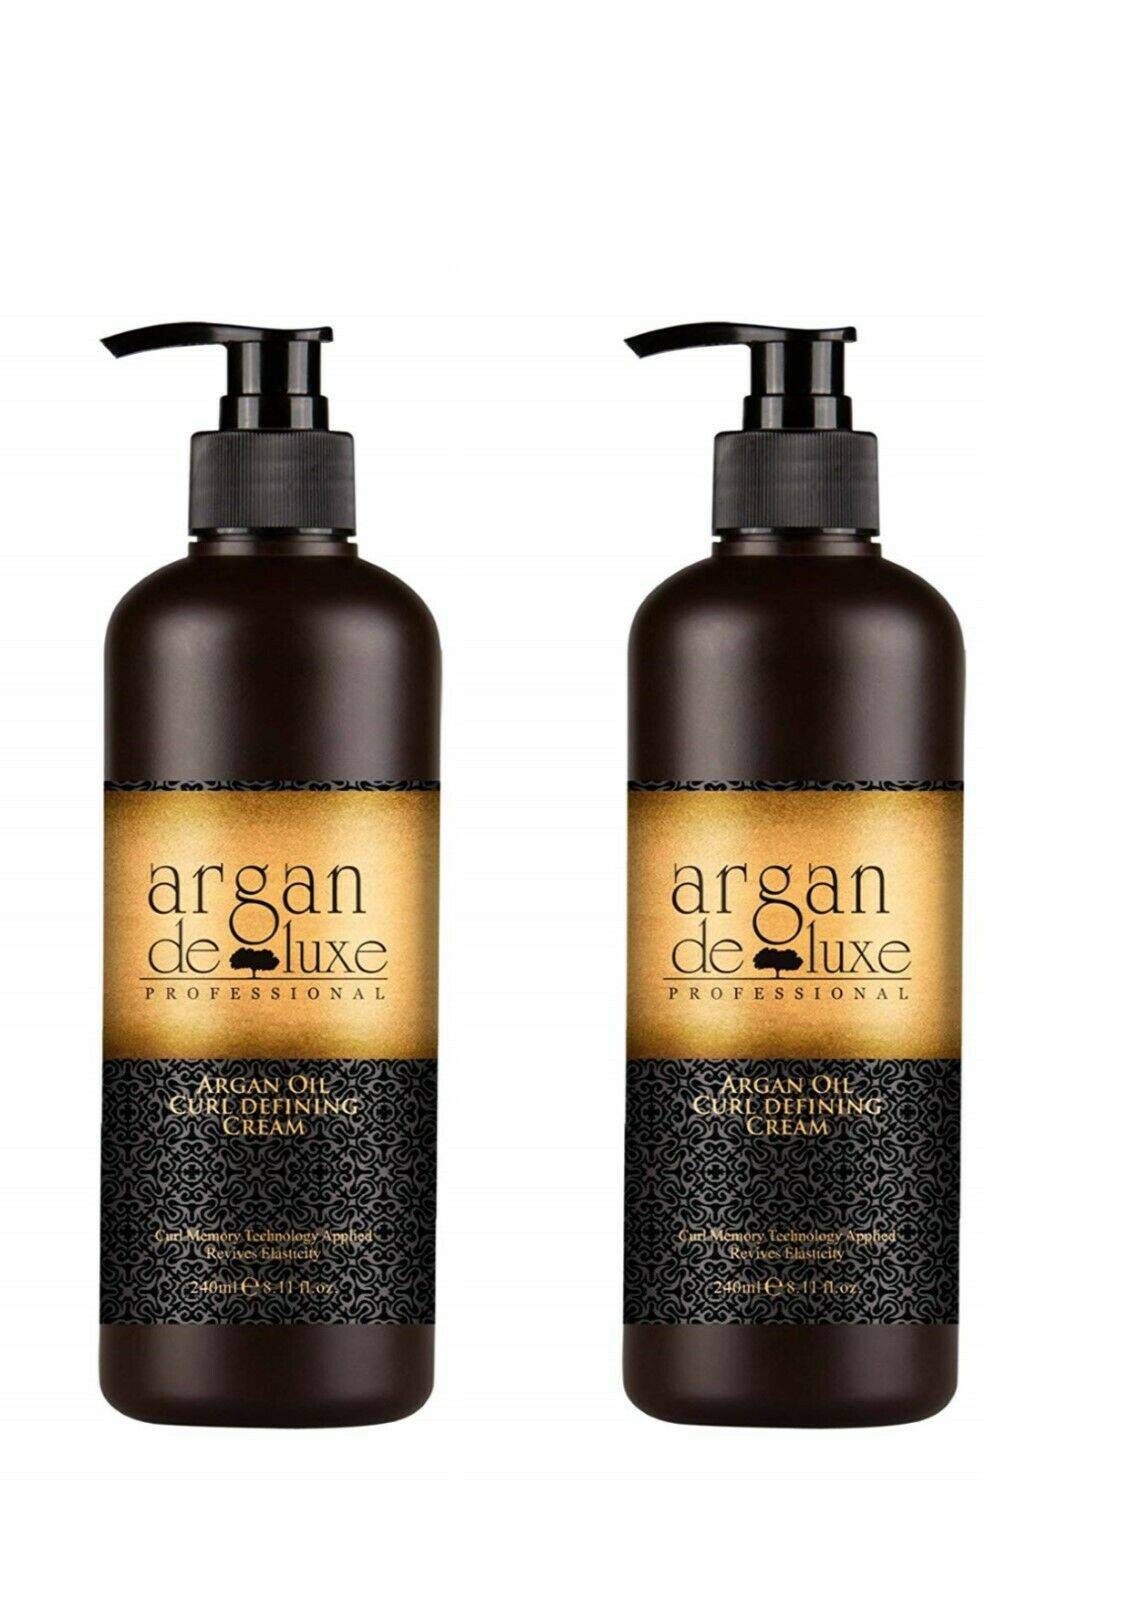 Argan de luxe Professsional  Argan Oil Curl Defining Cream 240ML X 2 - On Line Hair Depot